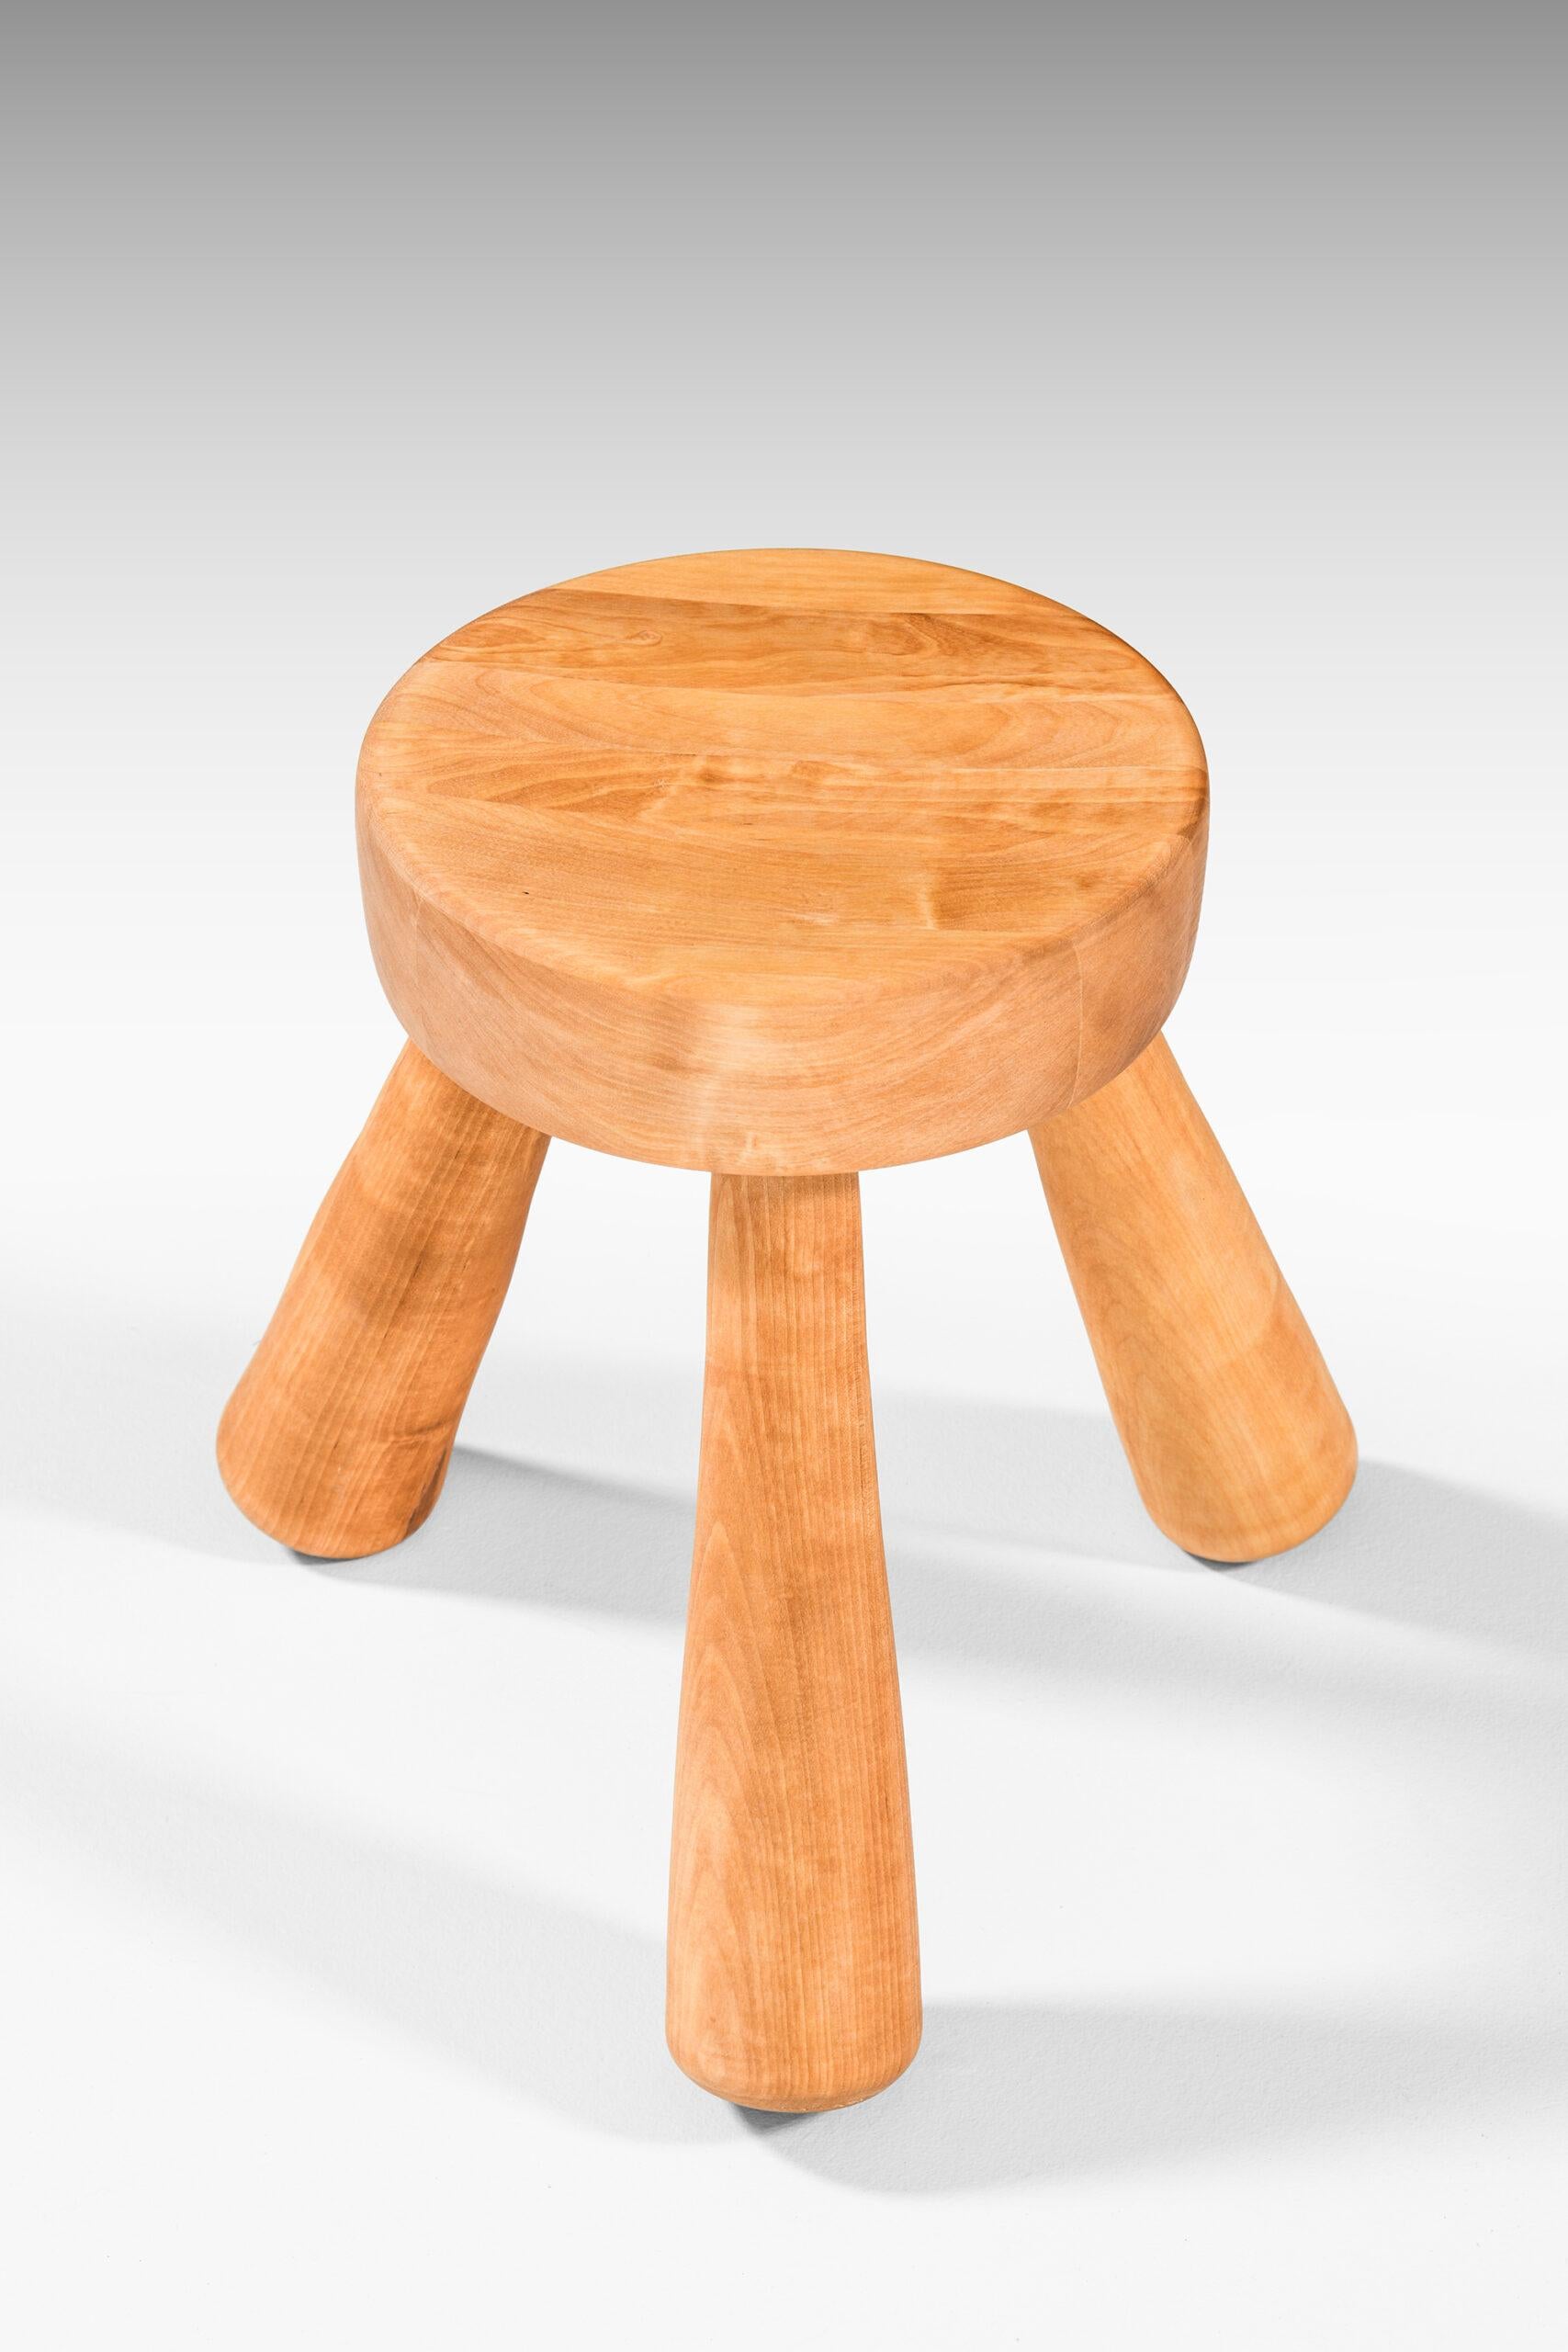 Rare stool designed by Ingvar Hildingsson. Produced by Ingvar Hildingsson in Sweden.